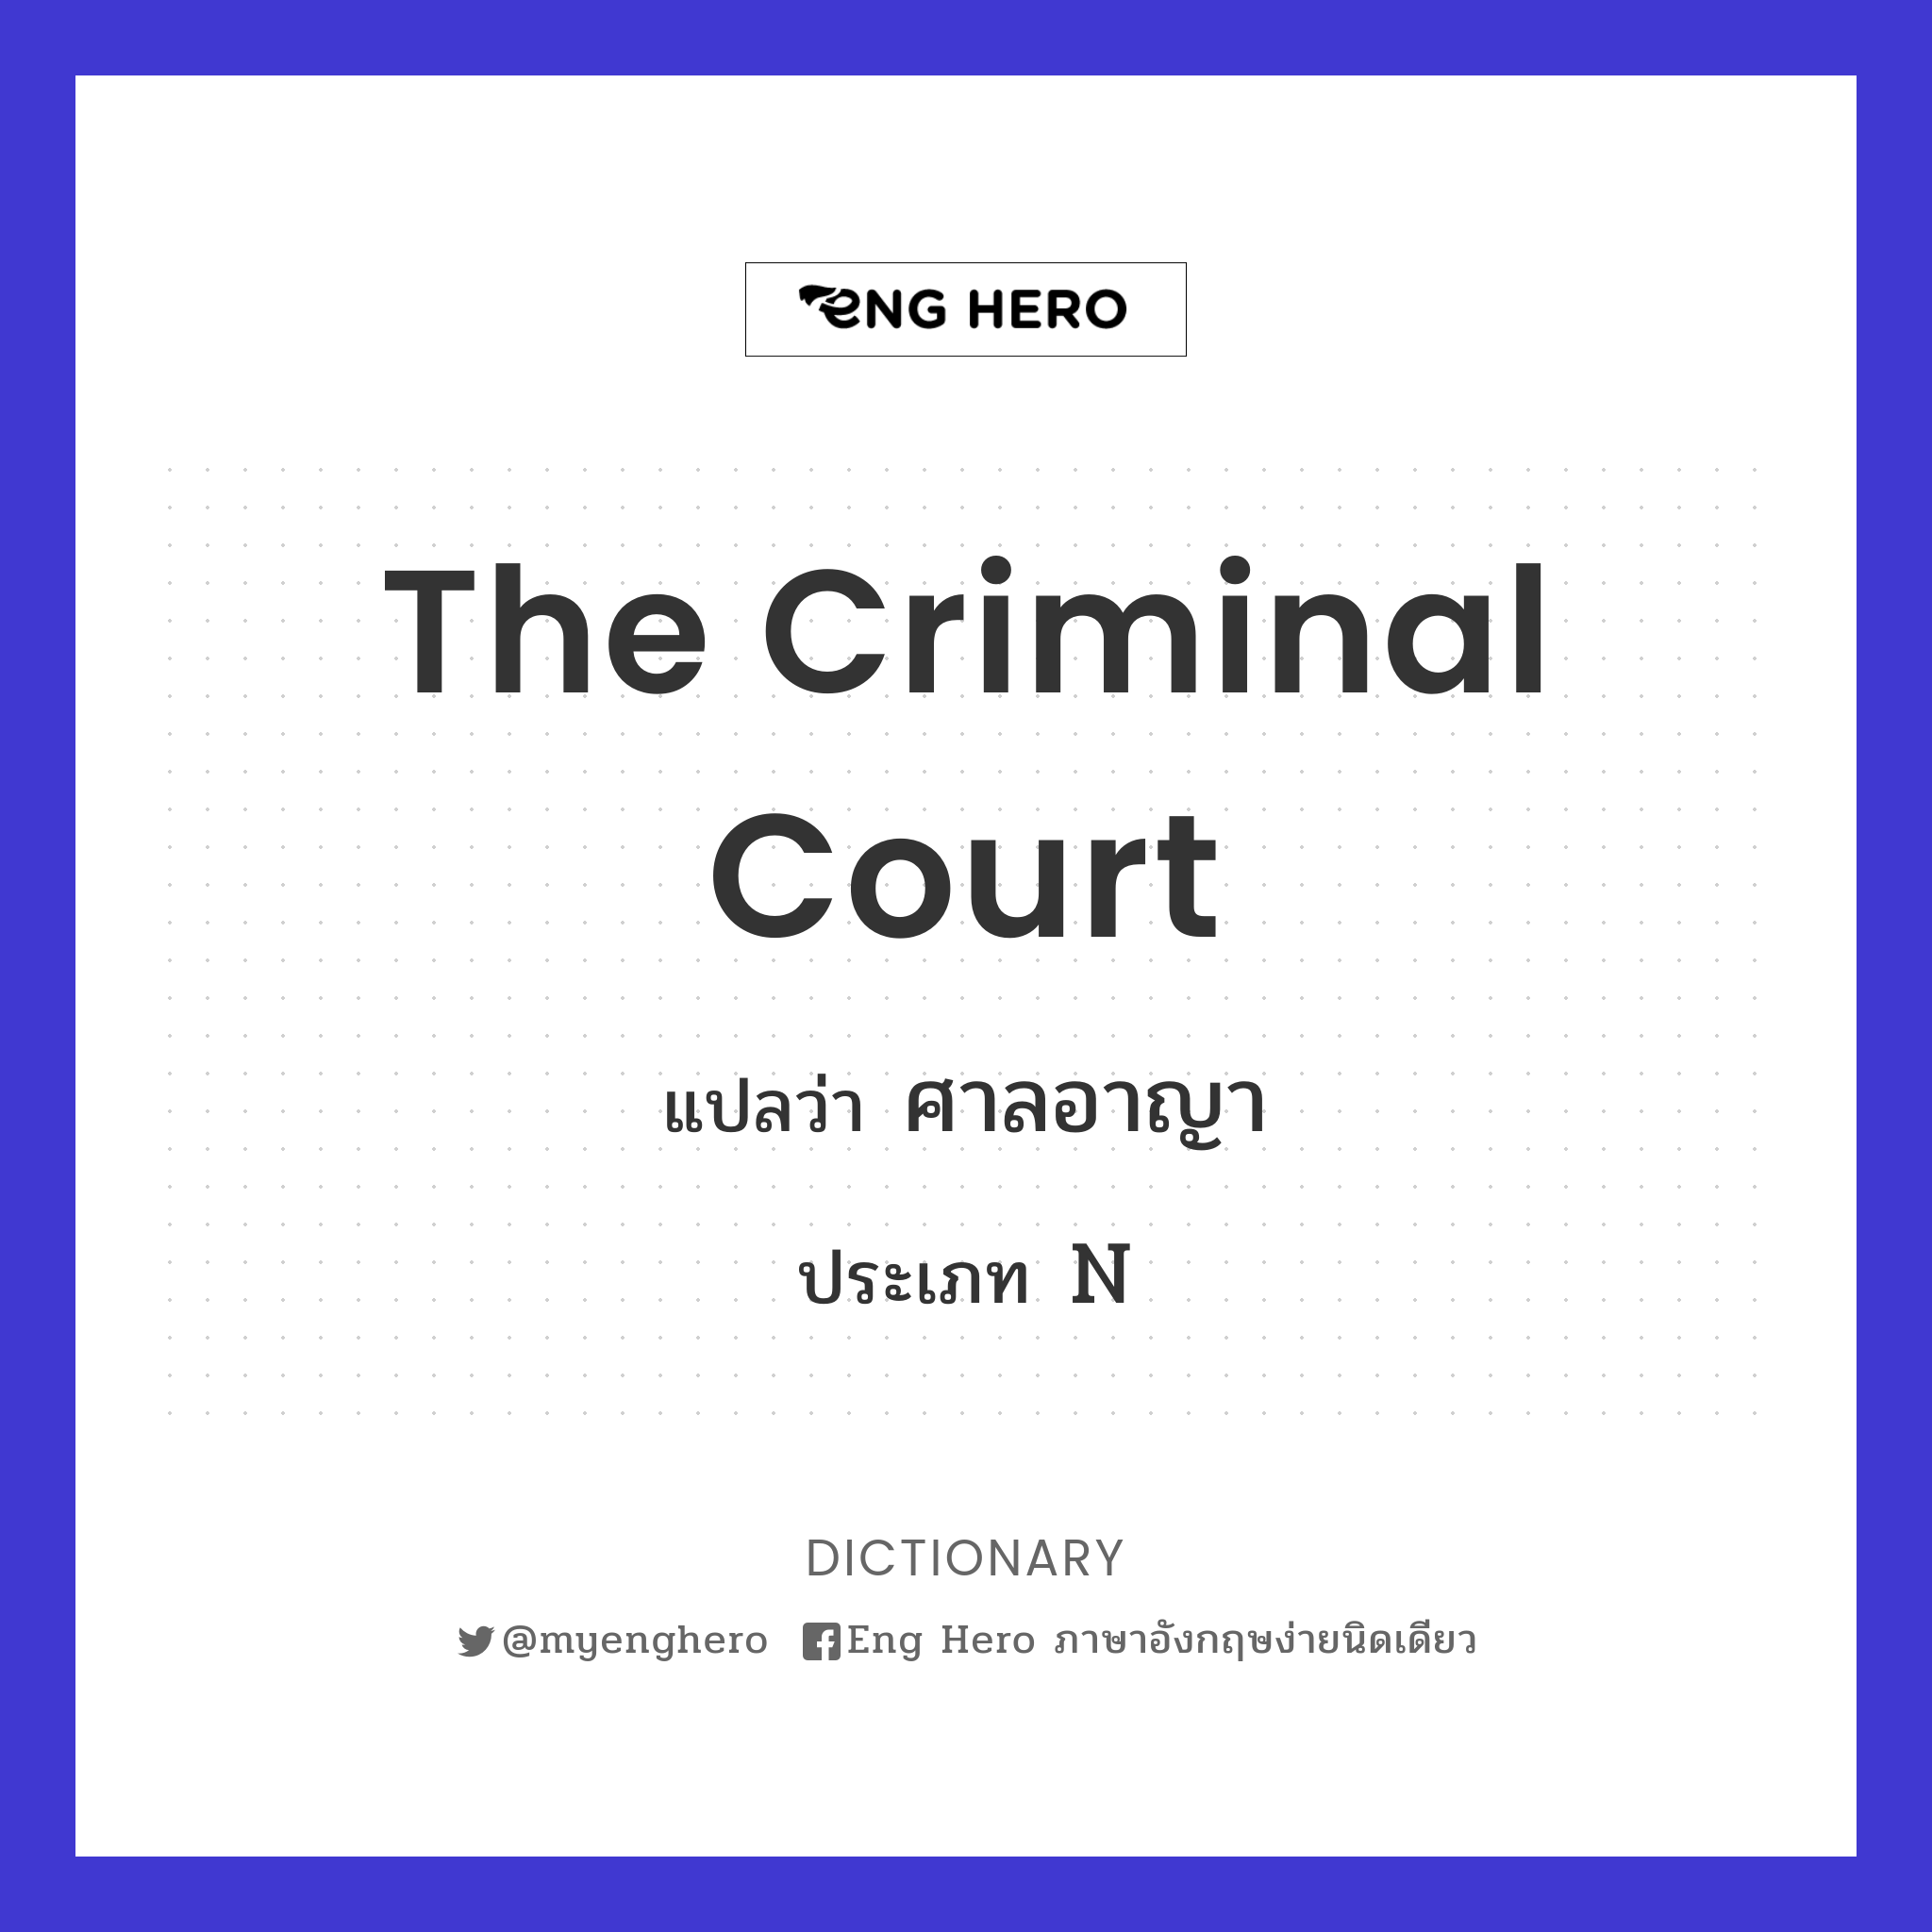 The Criminal Court